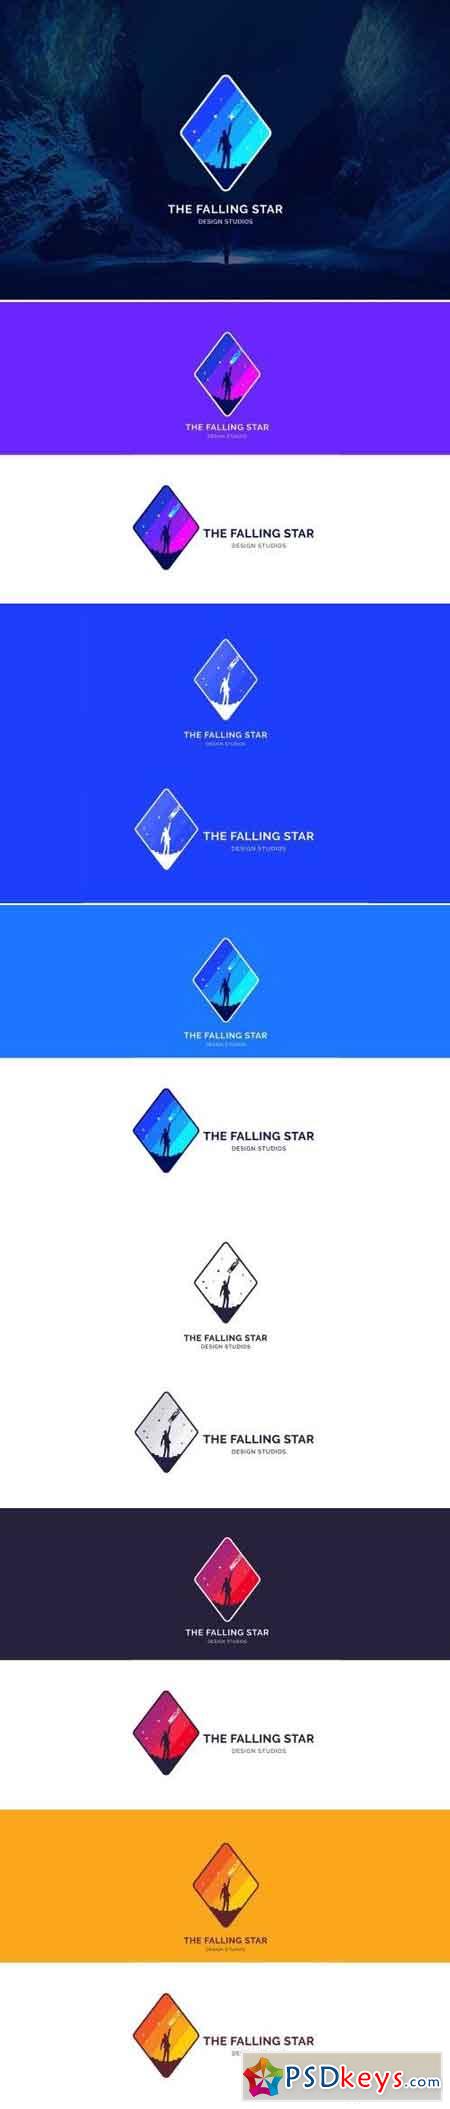 Sky, The Falling Star Logo